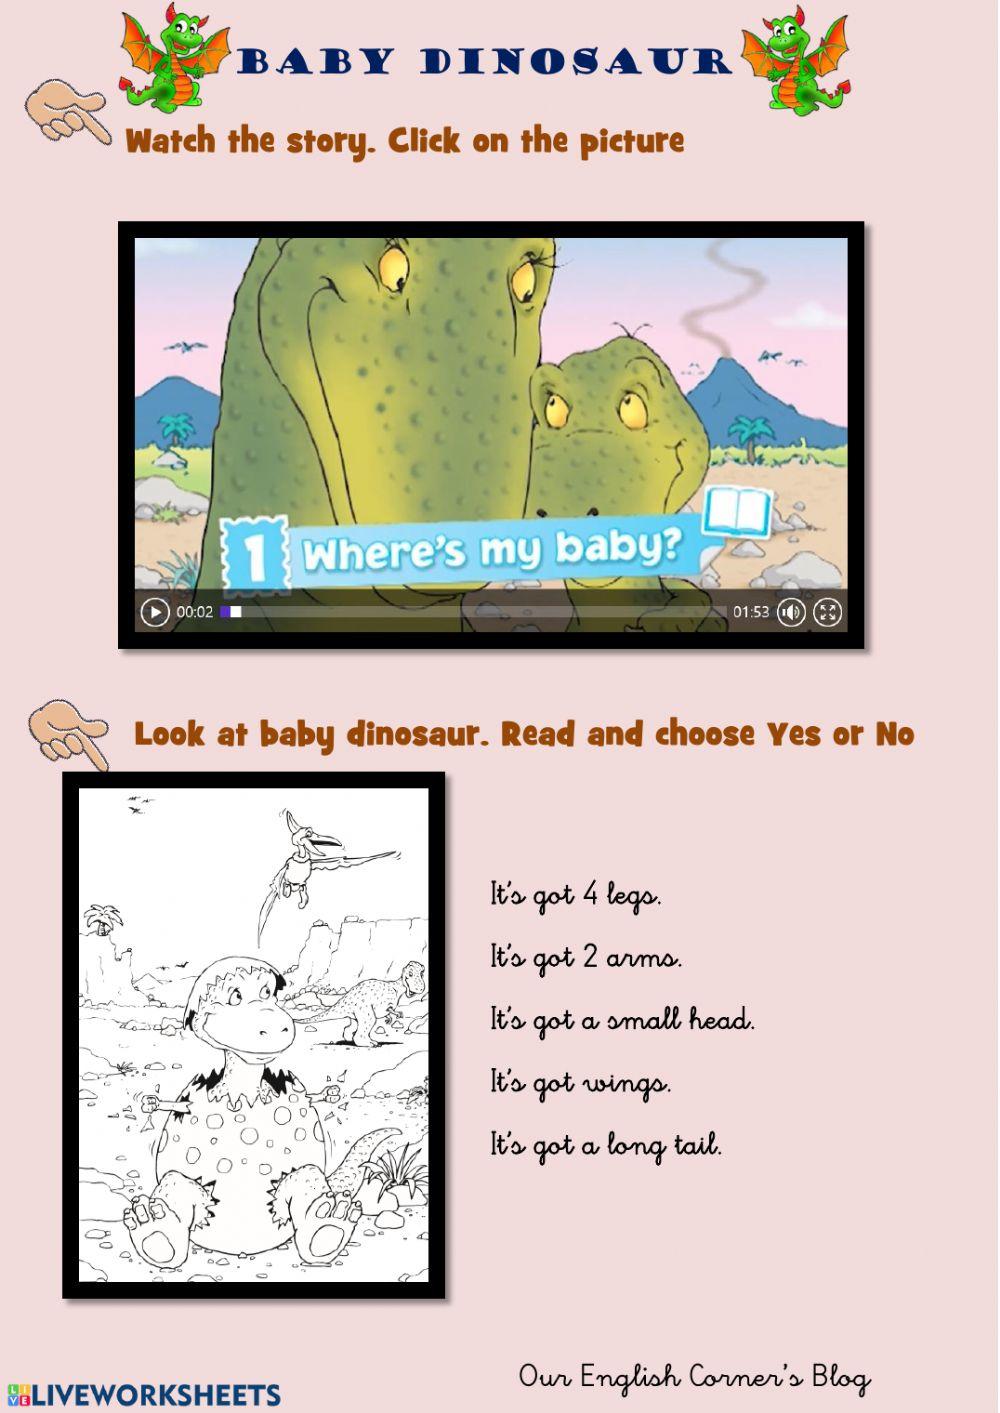 Baby Dinosaur tale